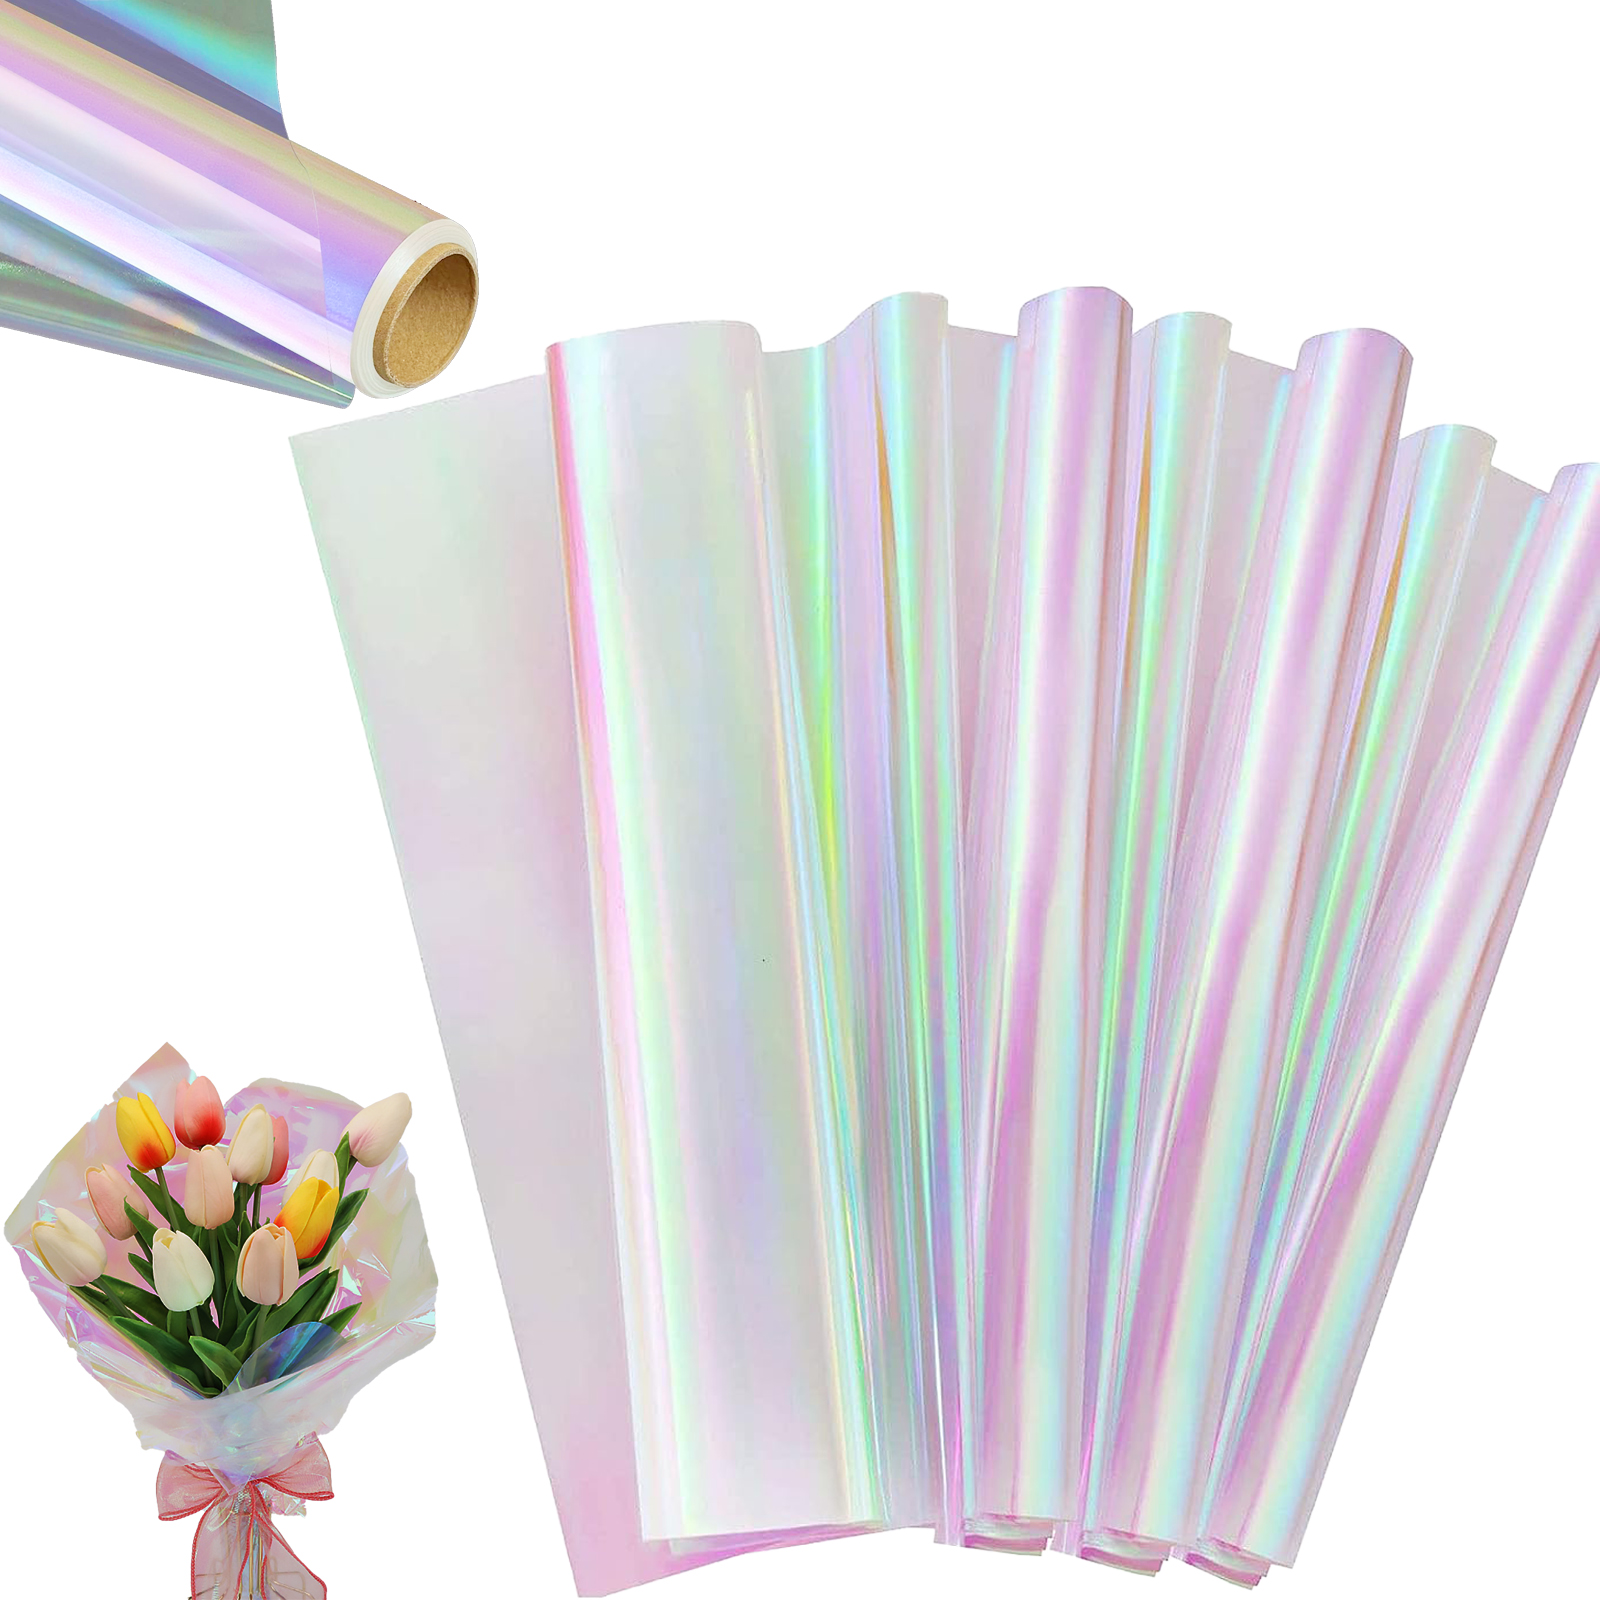 Iridescent Cellophane Iridescent Wrapping Paper Cellophane - Temu